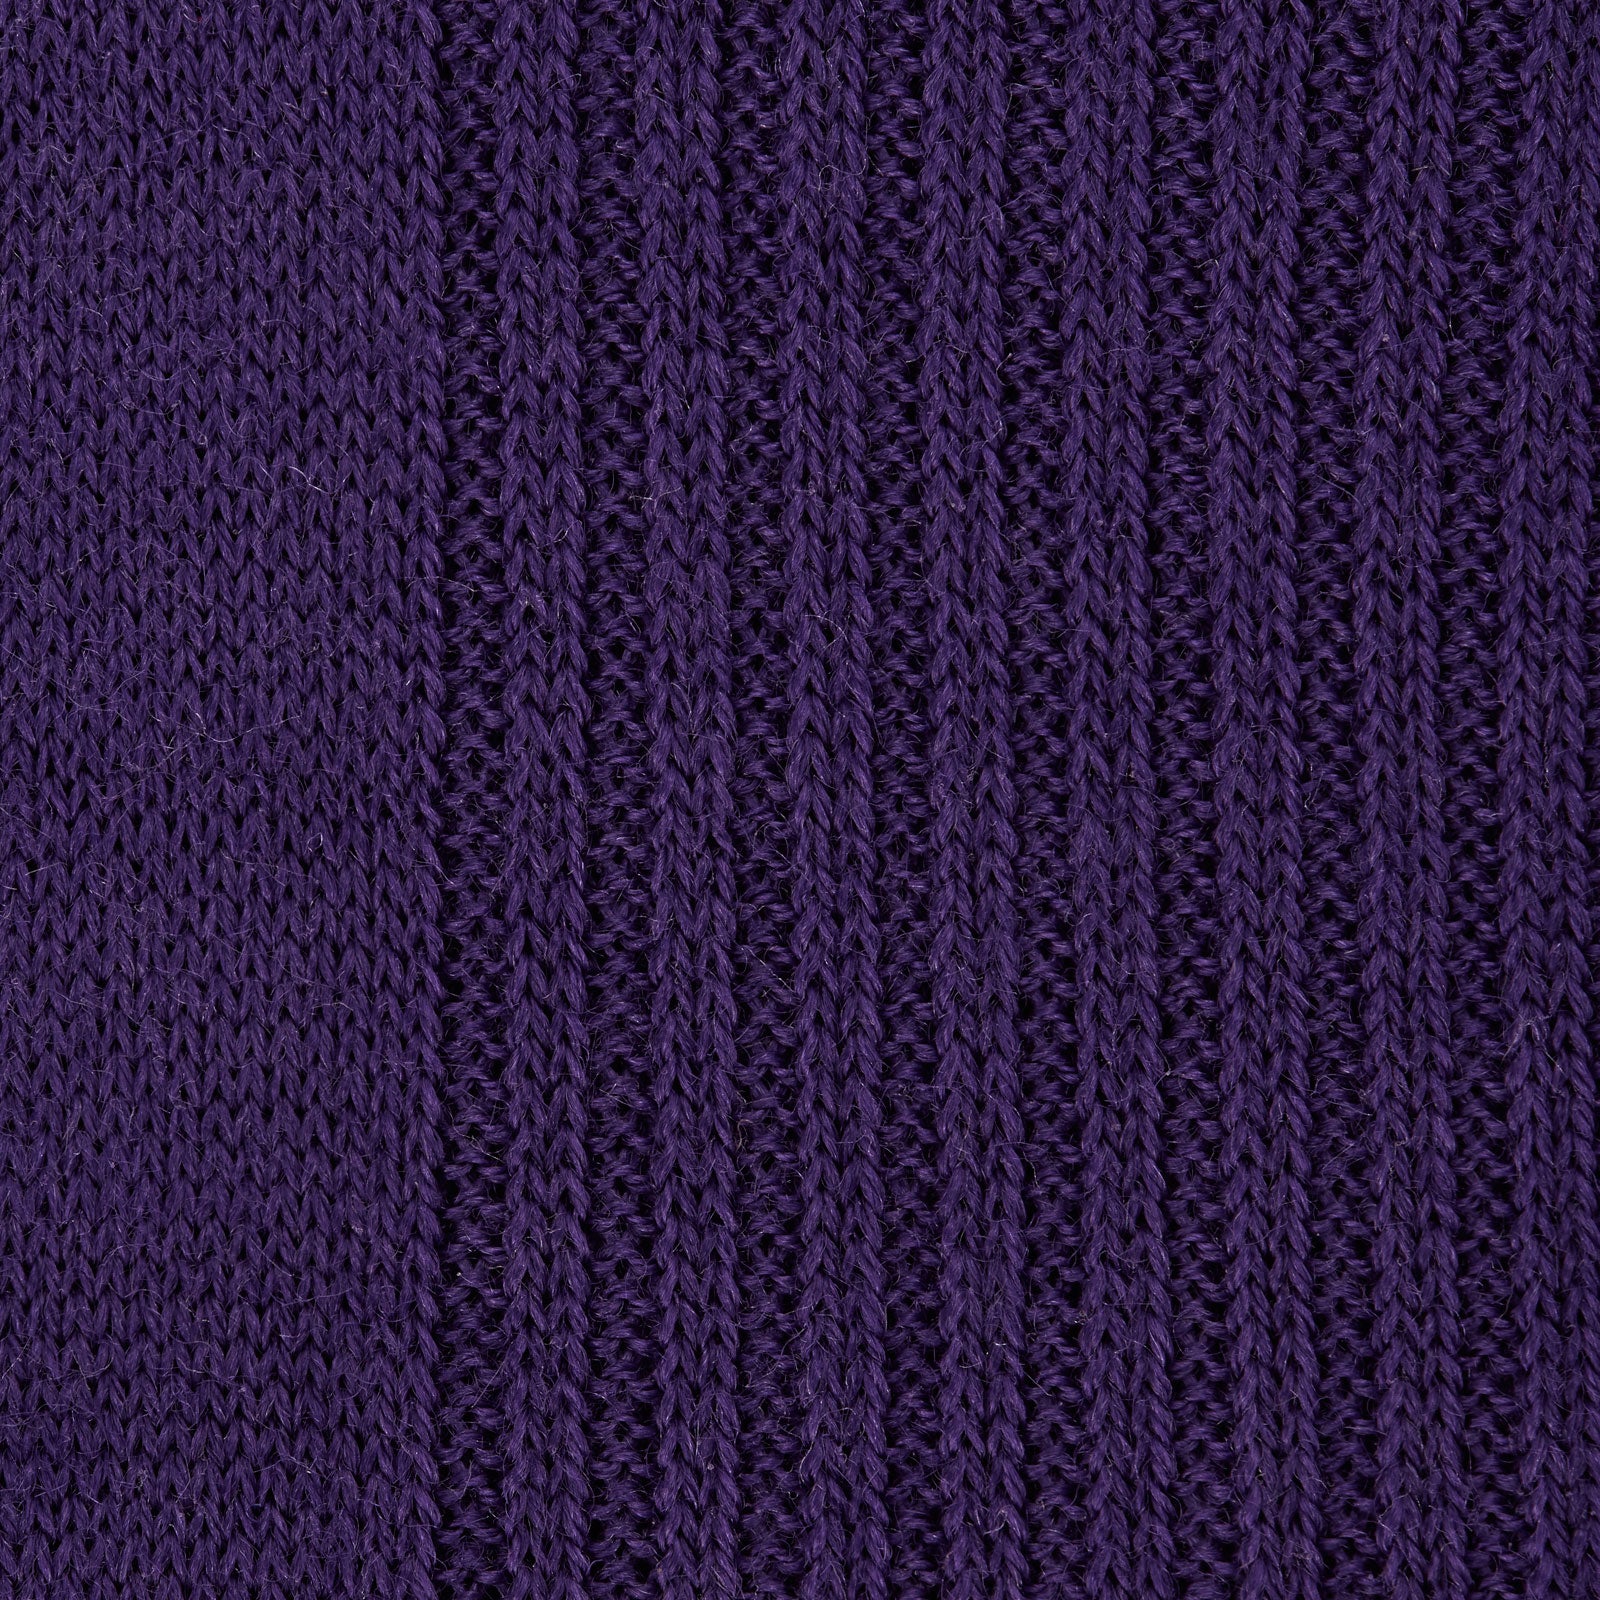 Purple Long Merino Wool Socks